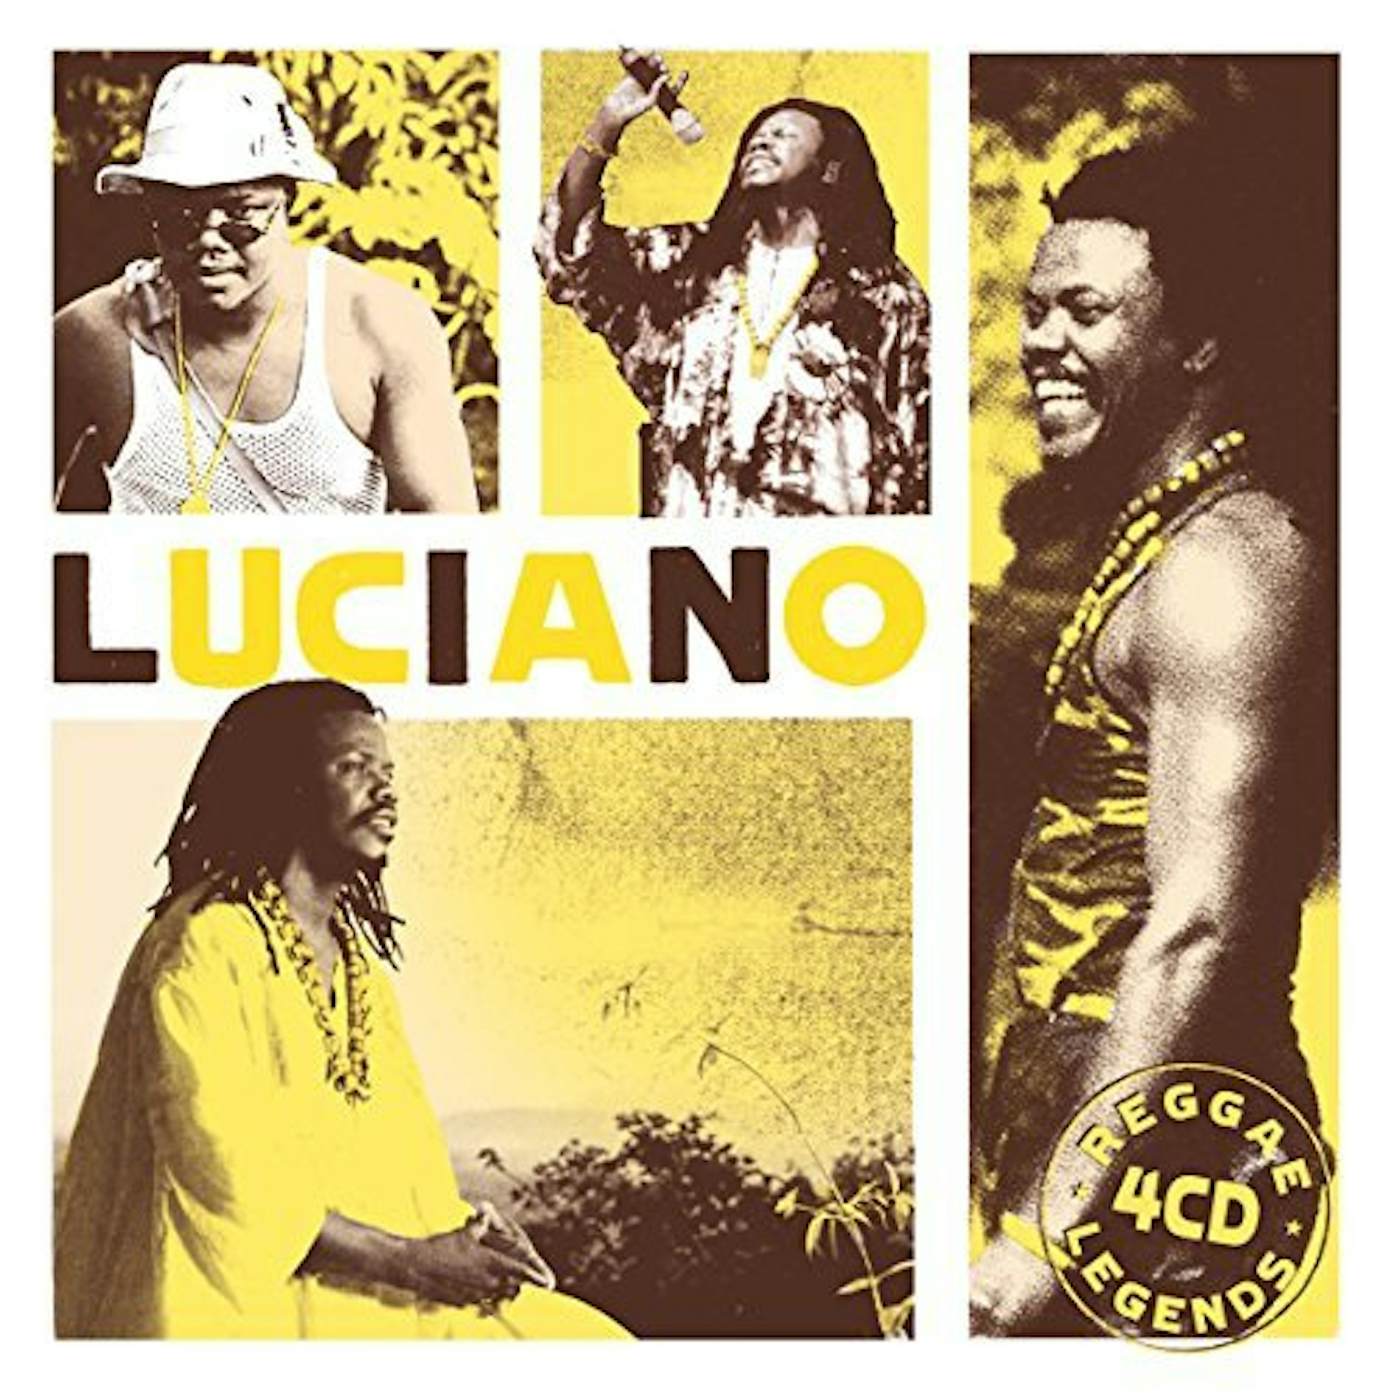 Luciano REGGAE LEGENDS CD